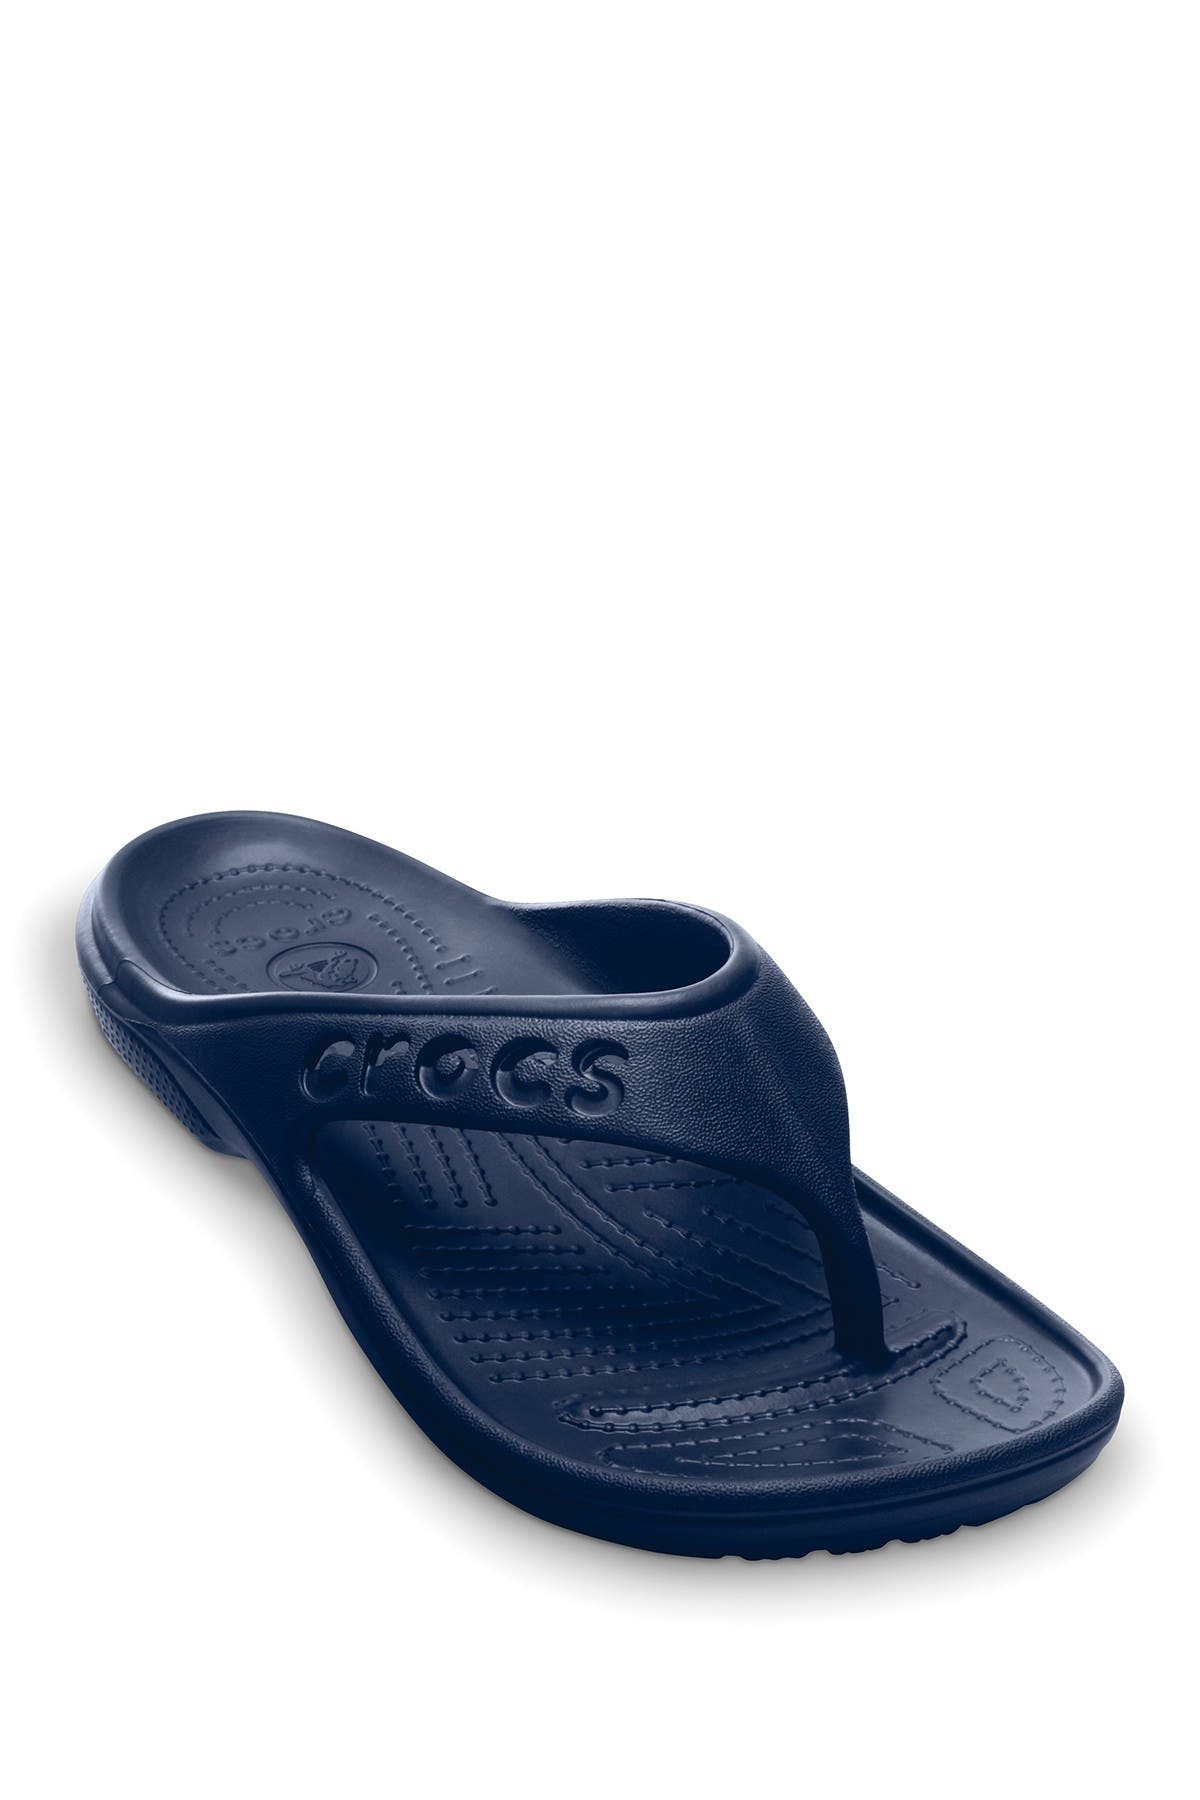 Crocs | Baya Flip Sandal | Nordstrom Rack